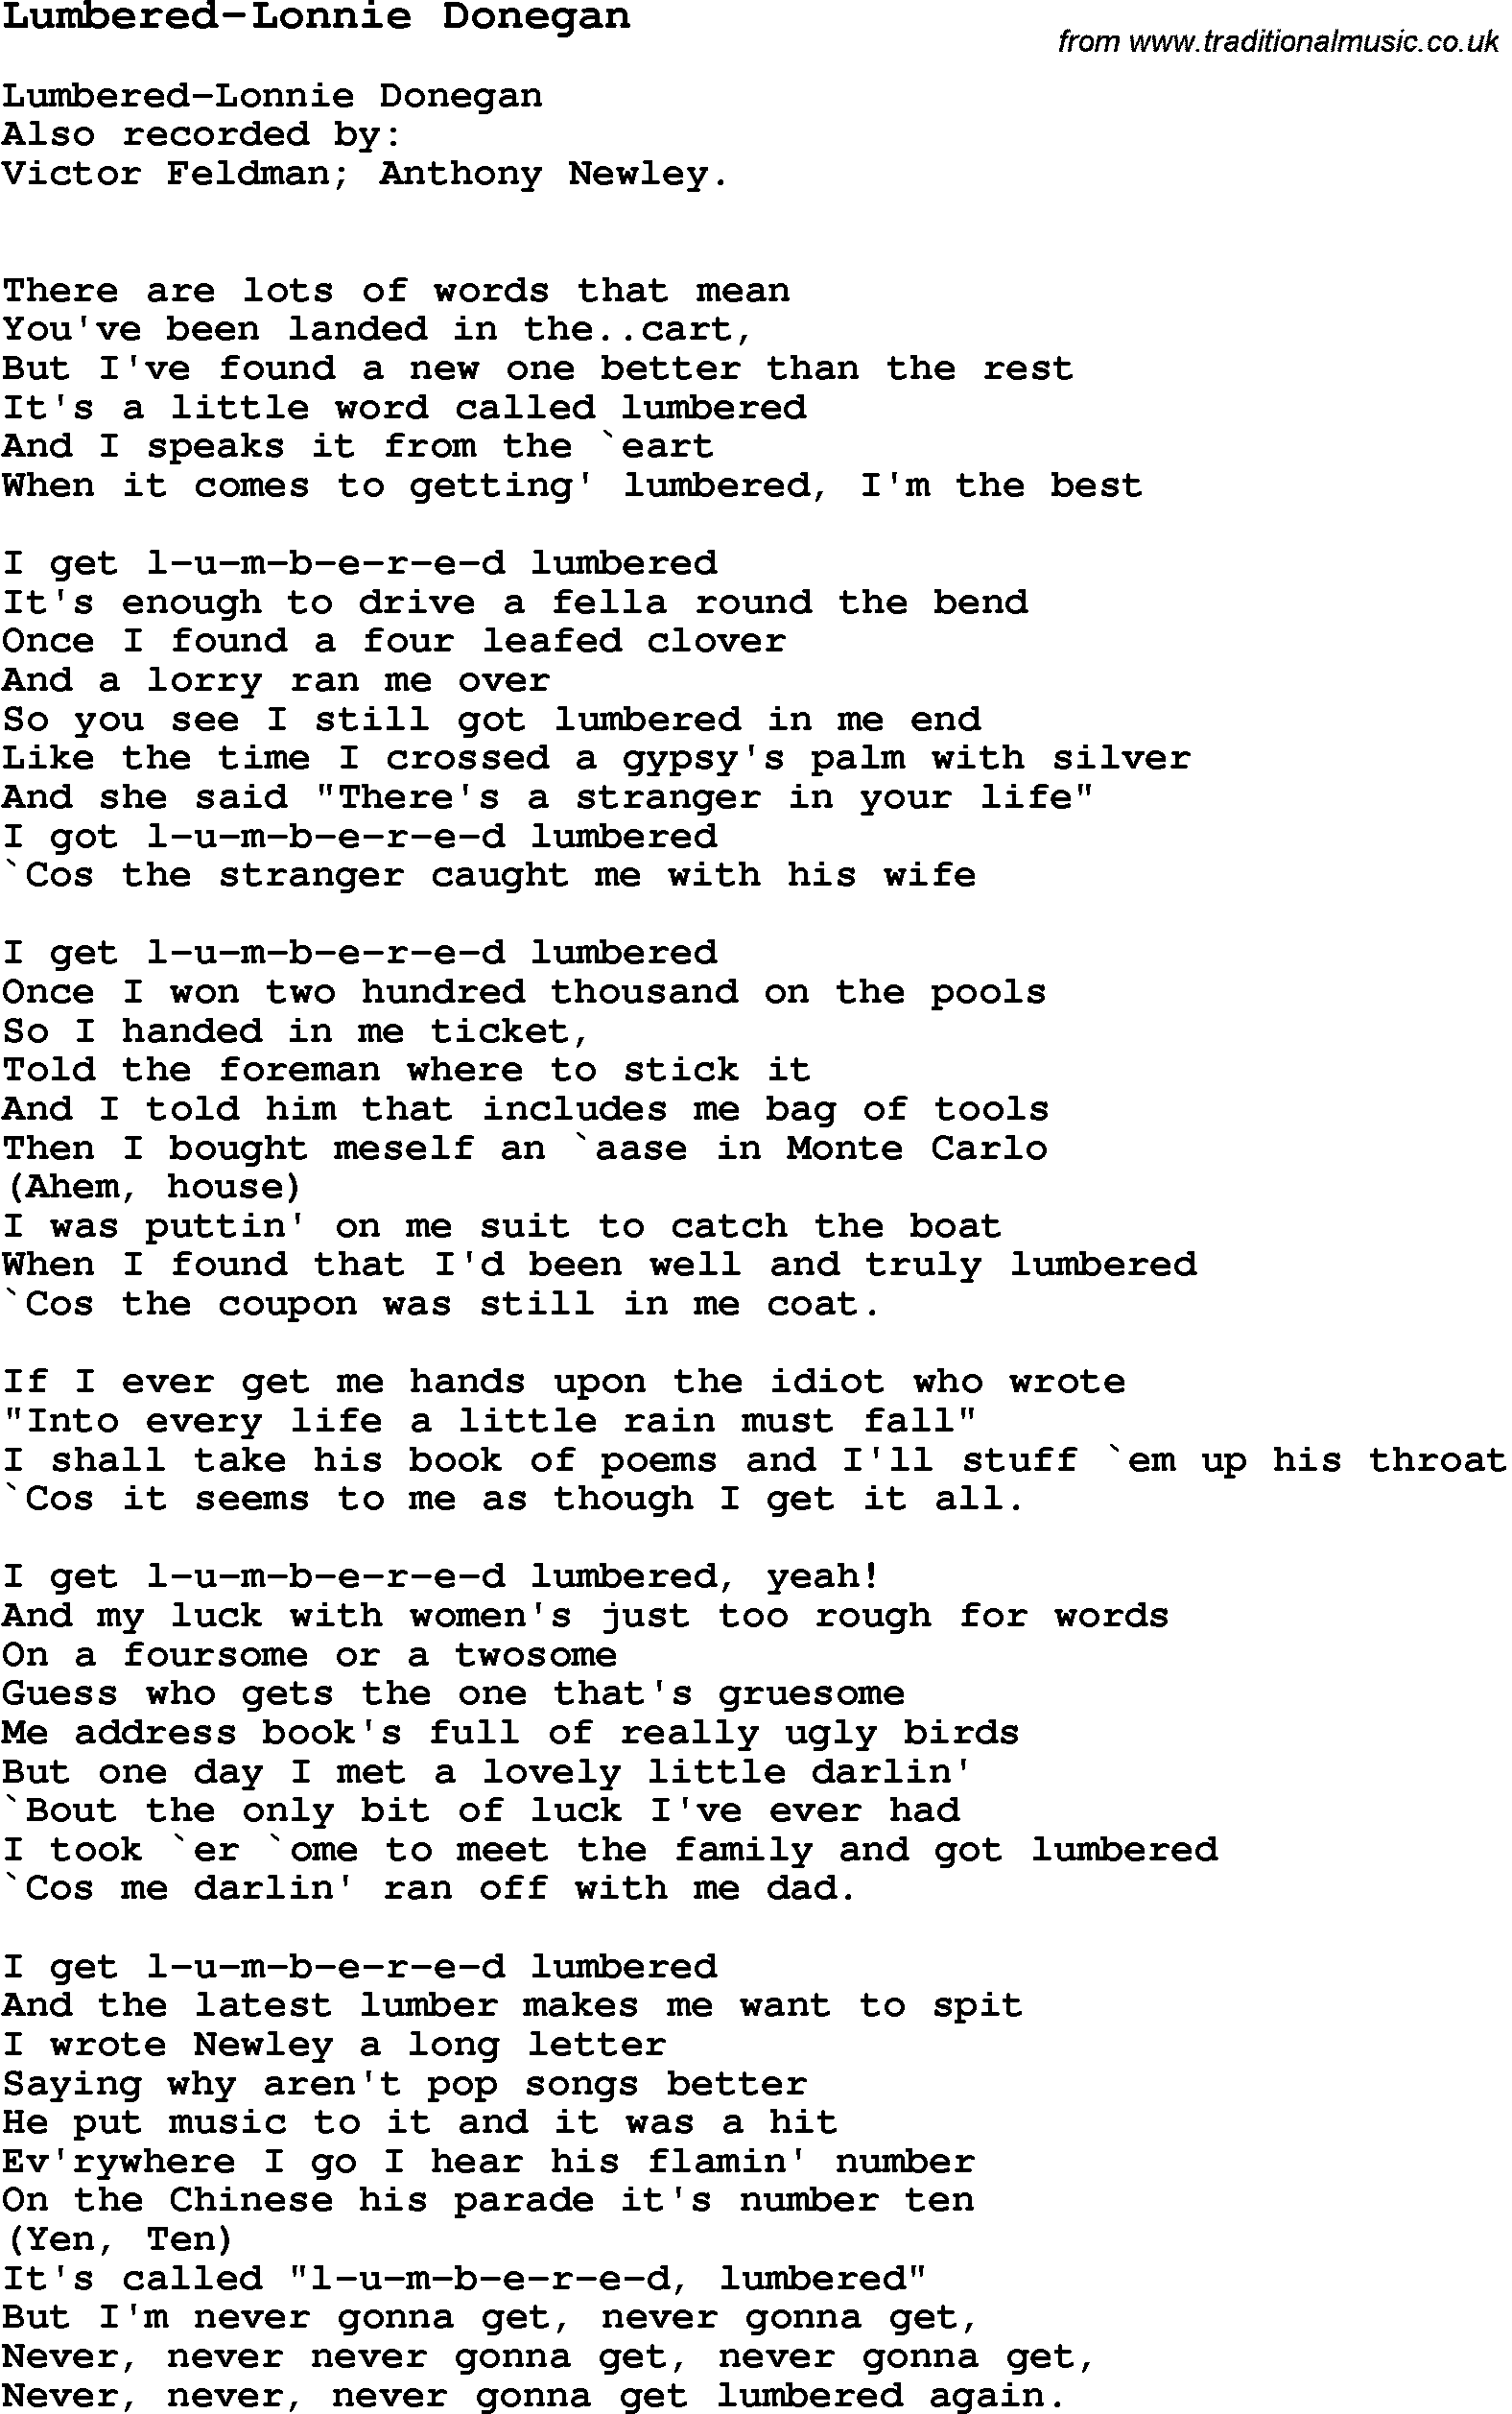 Skiffle Song Lyrics for Lumbered-Lonnie Donegan.